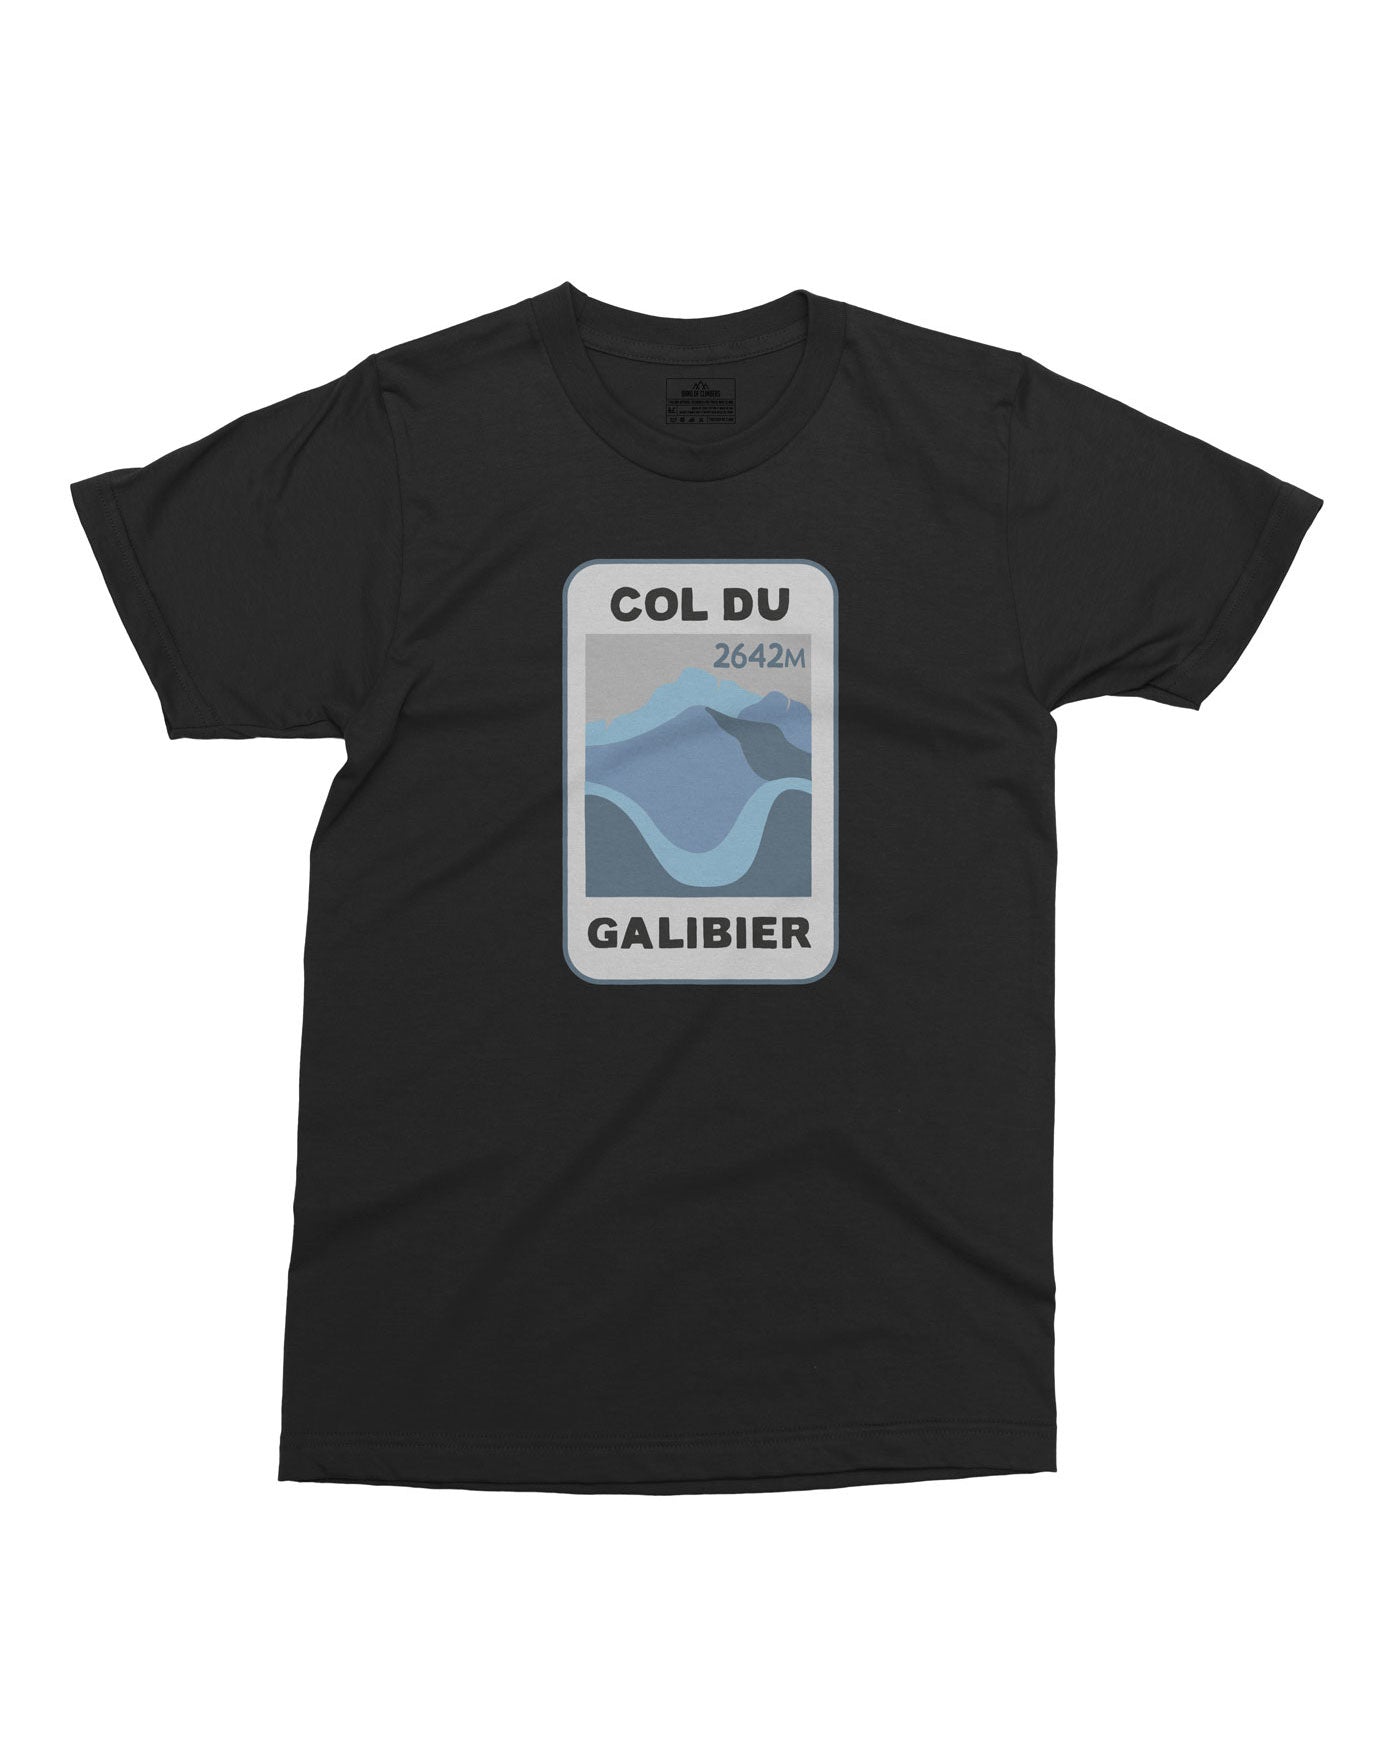 Col du Galibier T-shirt - Black